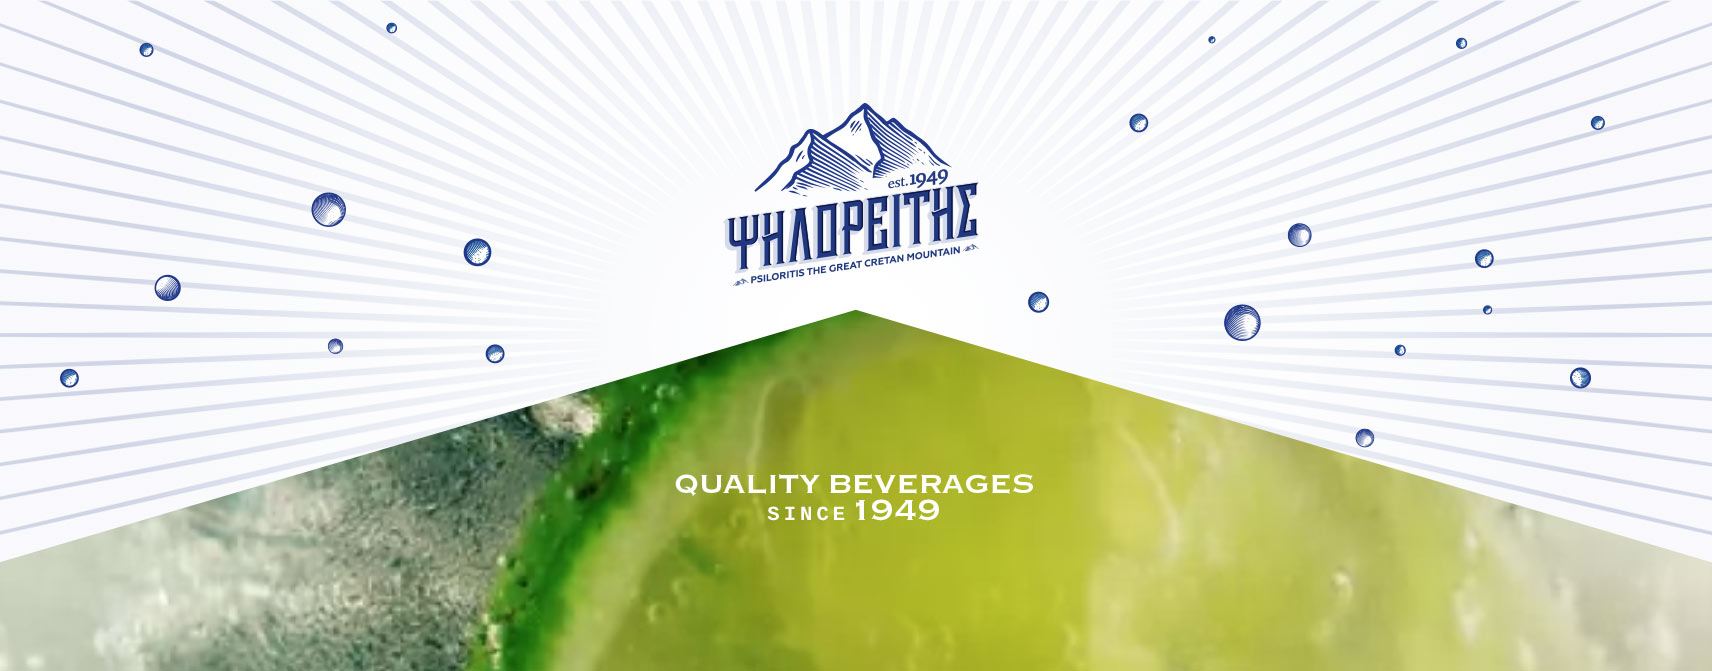 Psiloreitis Quality beverages since 1949